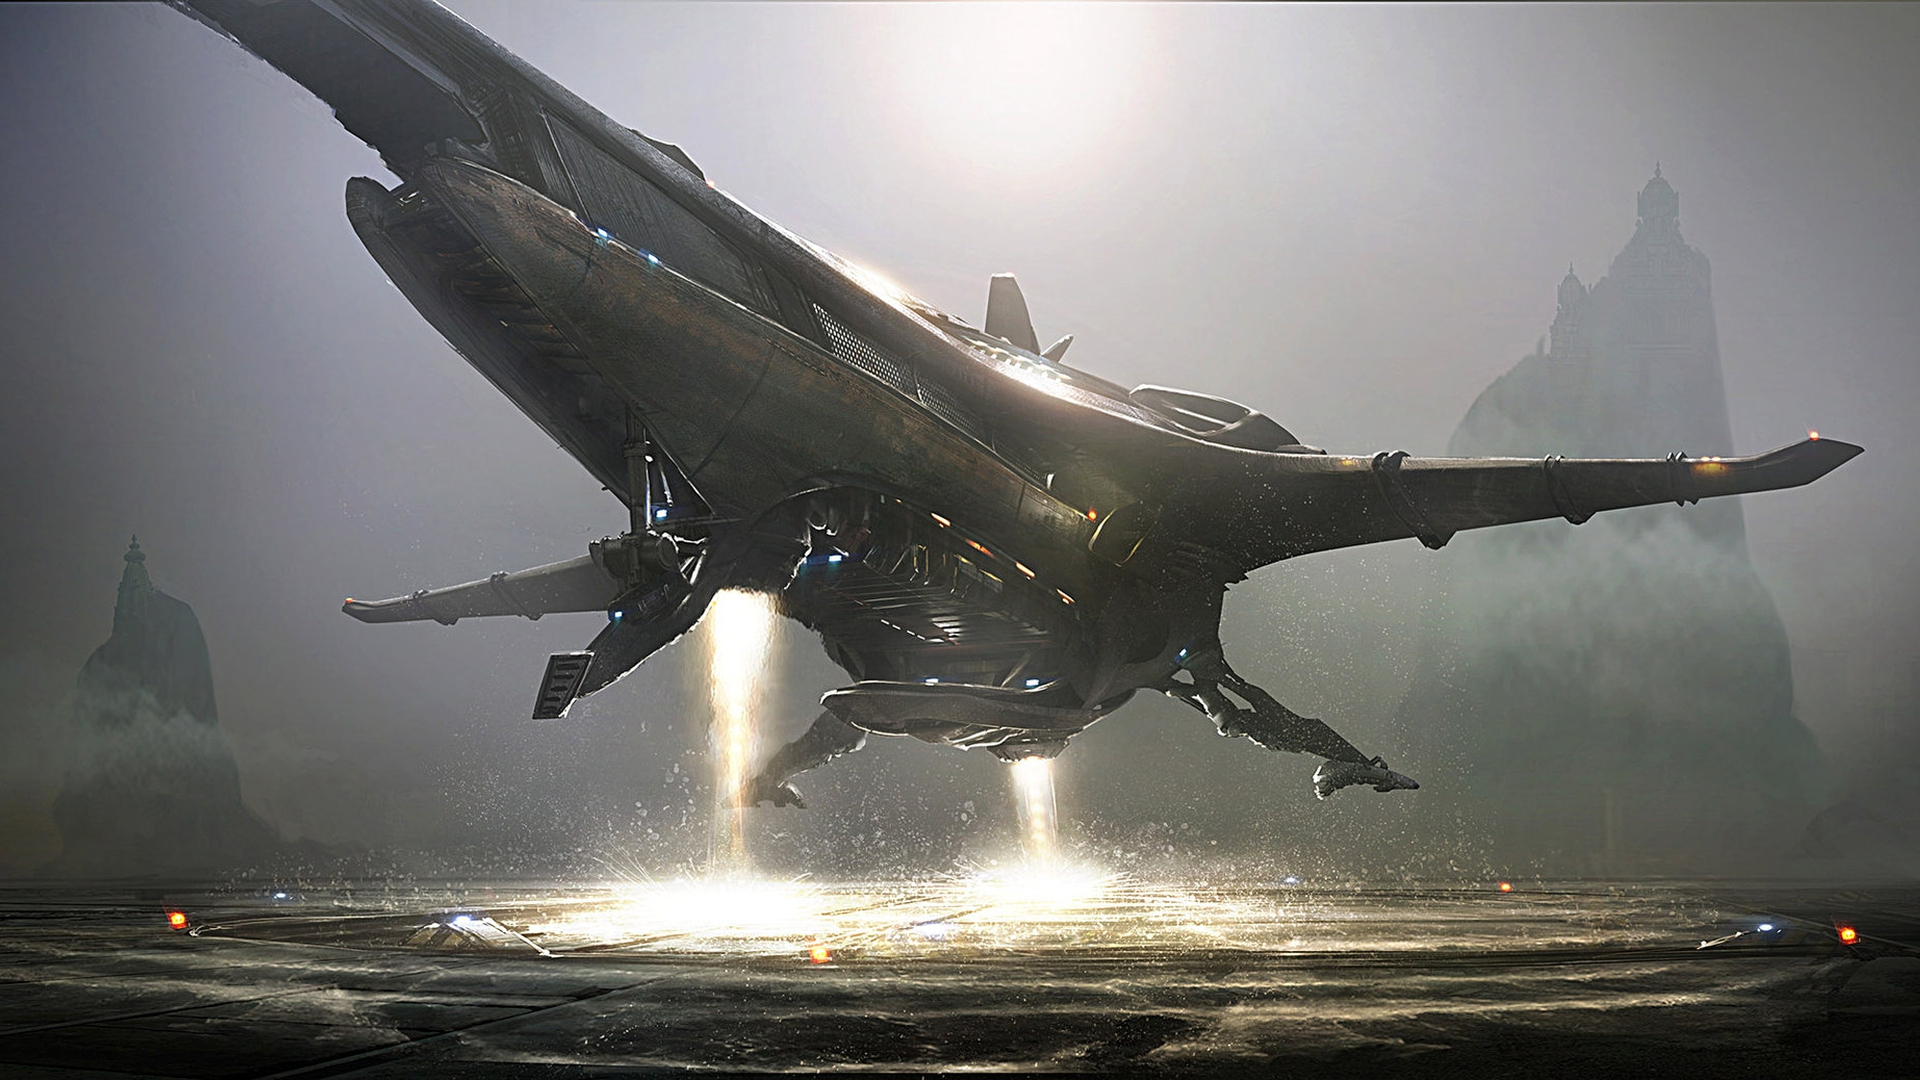 General 1920x1080 fantasy art science fiction spaceship aliens Star Citizen concept art video games digital art vehicle PC gaming